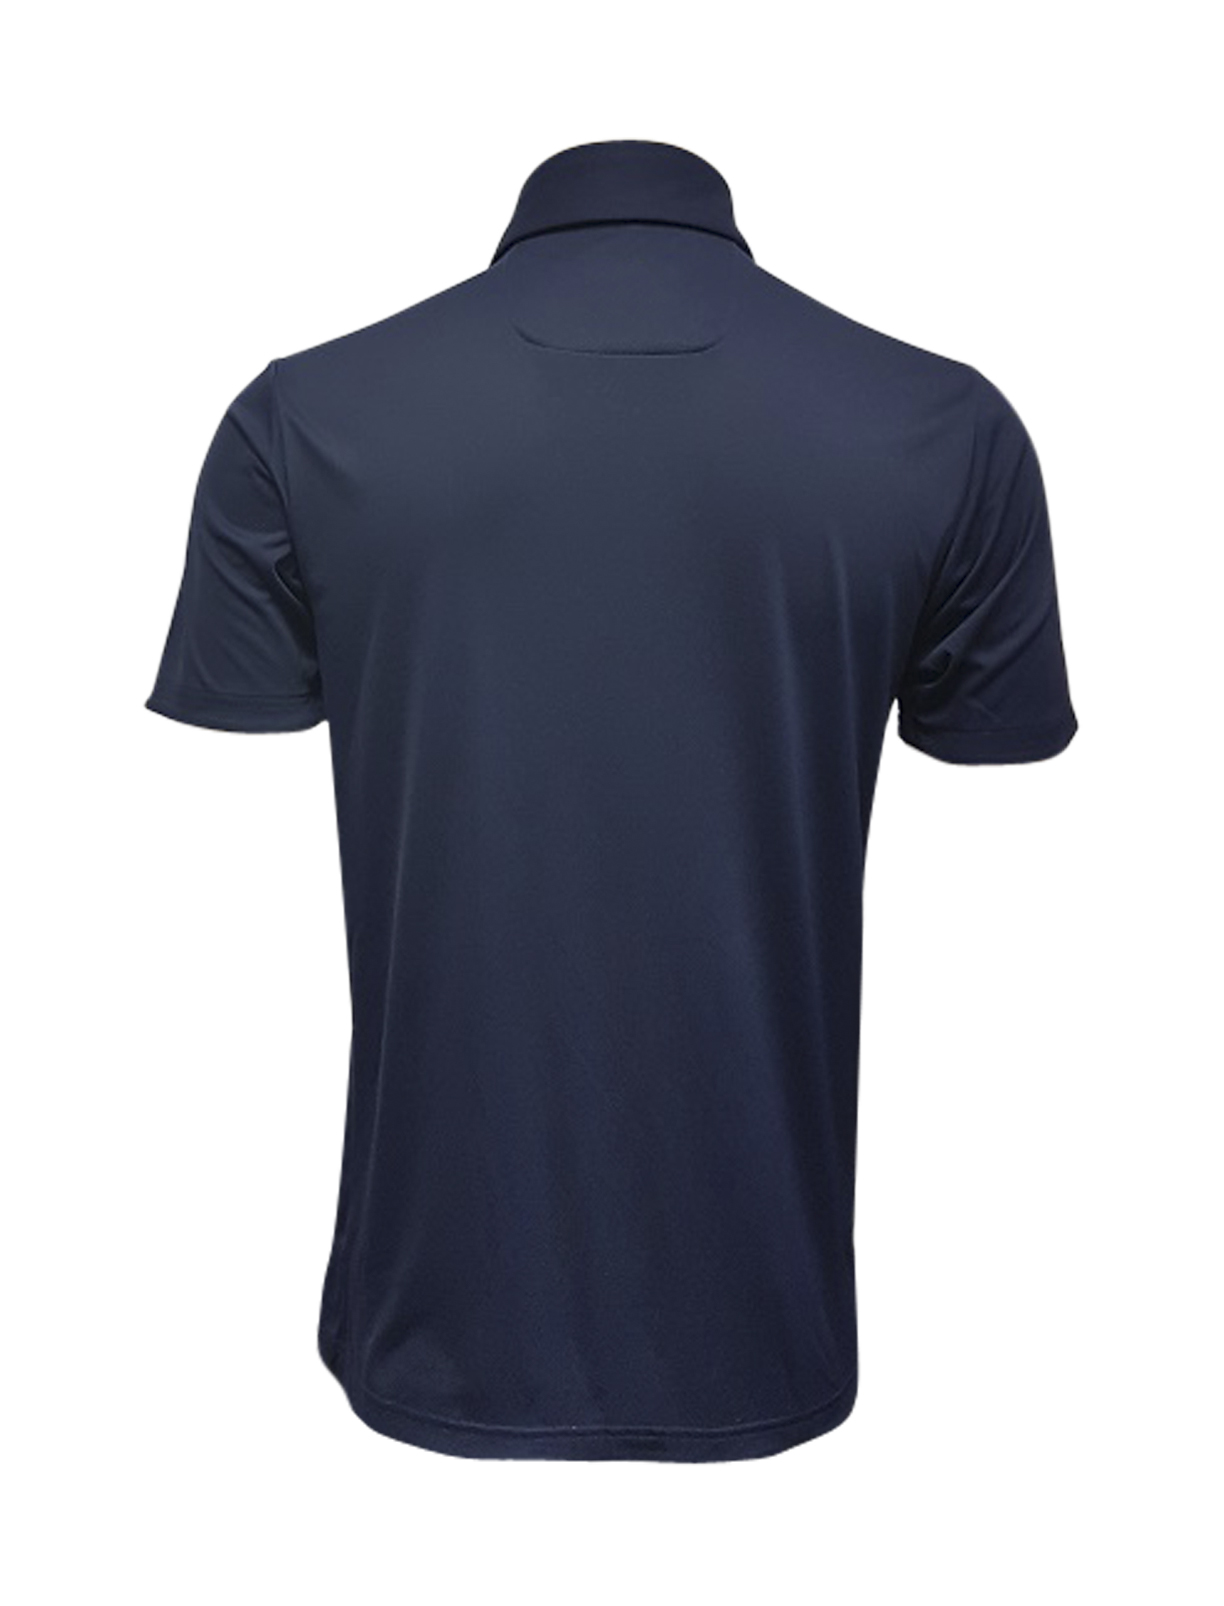 BKACP003 – Male Navy Blue Adidas Golf Polo Tee – Uniform Online